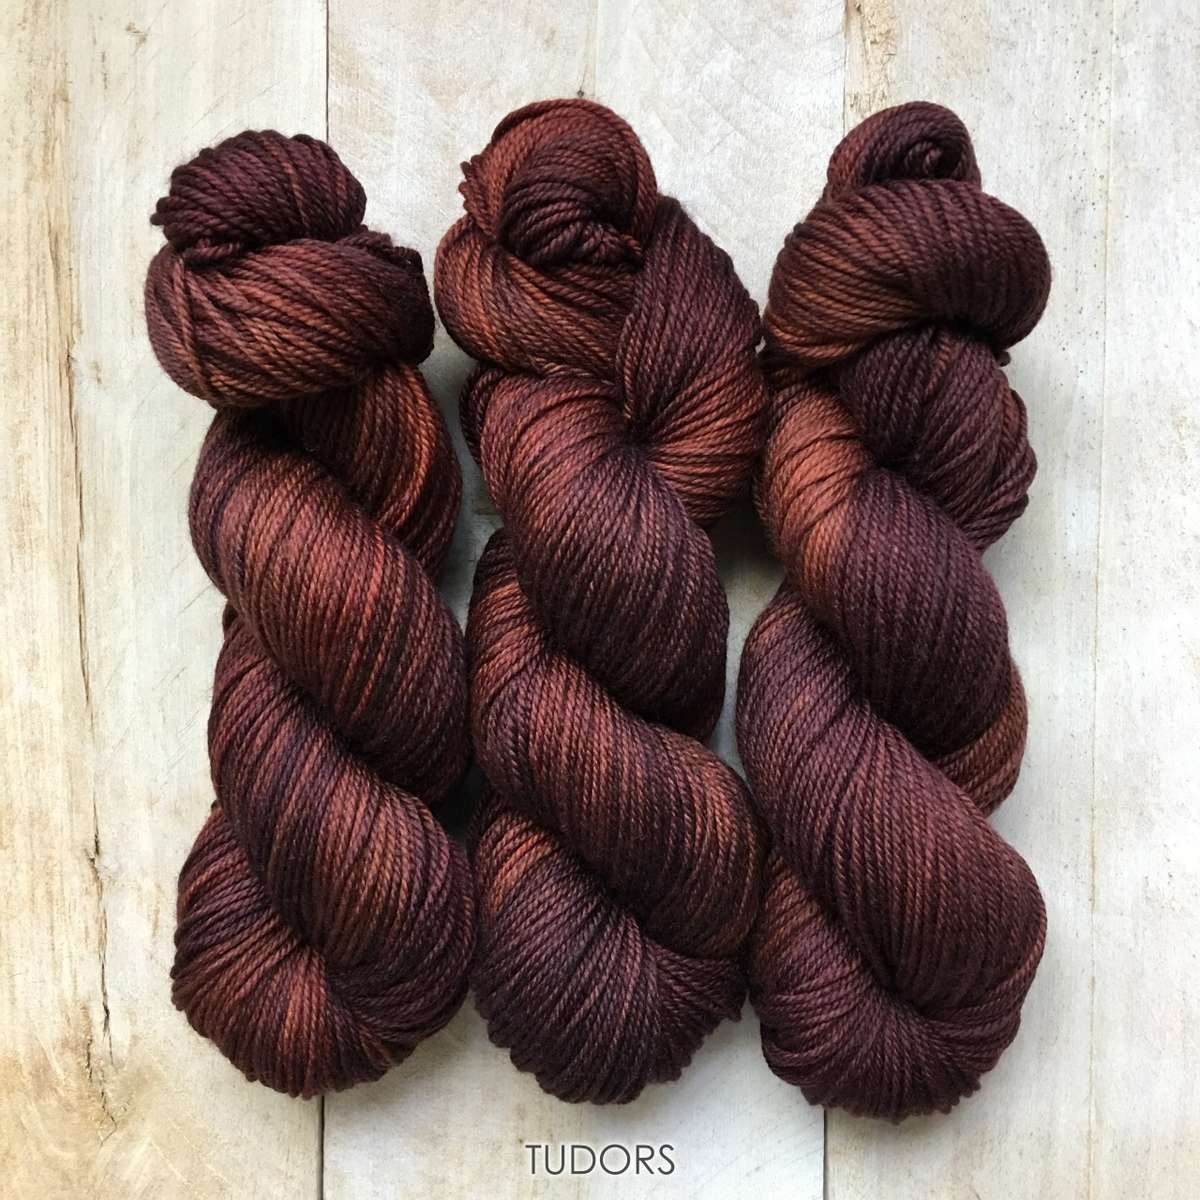 Hand-dyed yarn Louise Robert Tudors